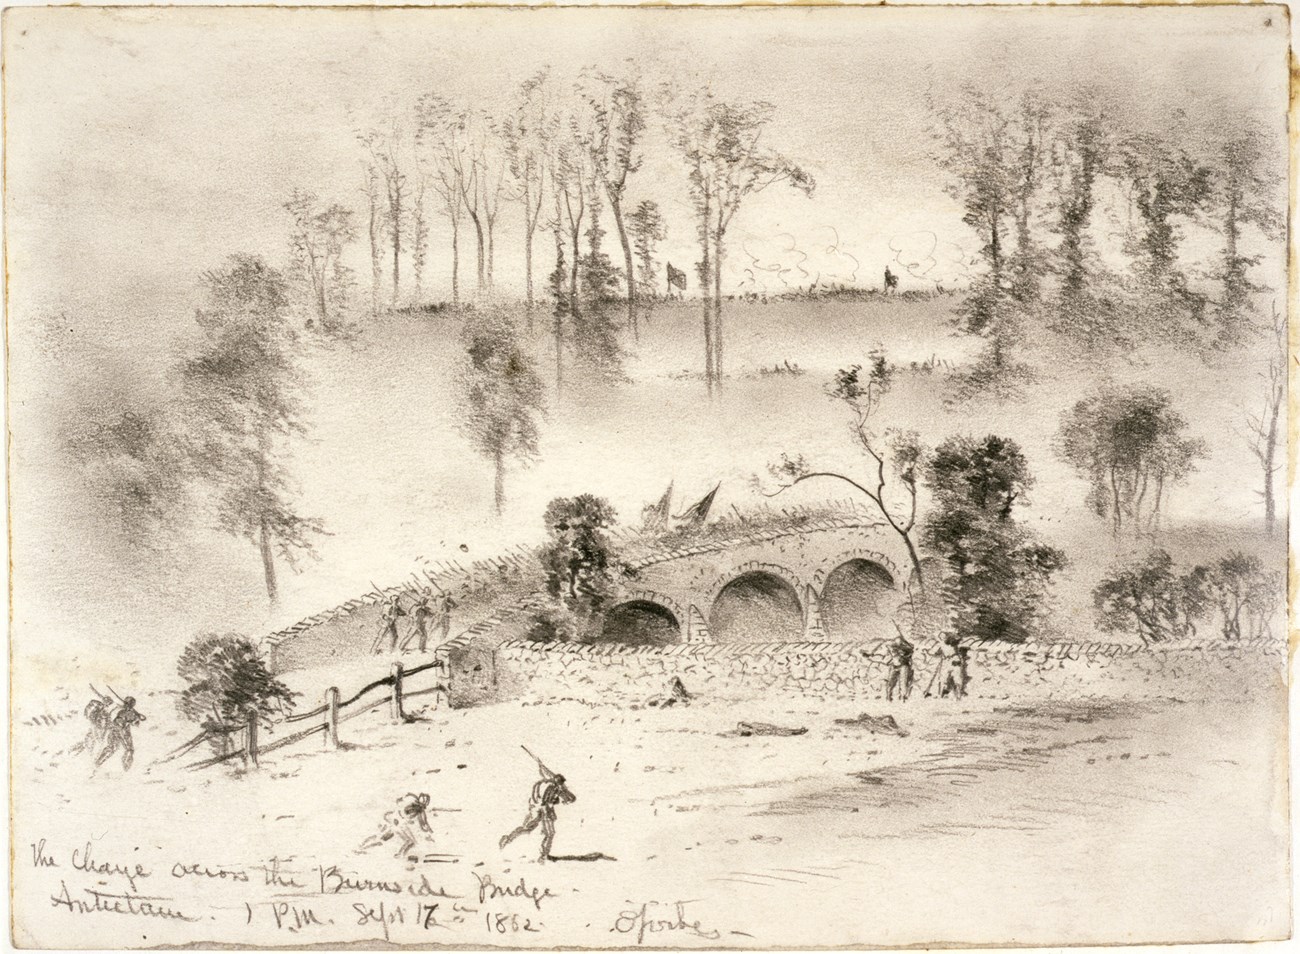 Edwin Forbes sketch of Union soldiers charging across Burnside Bridge